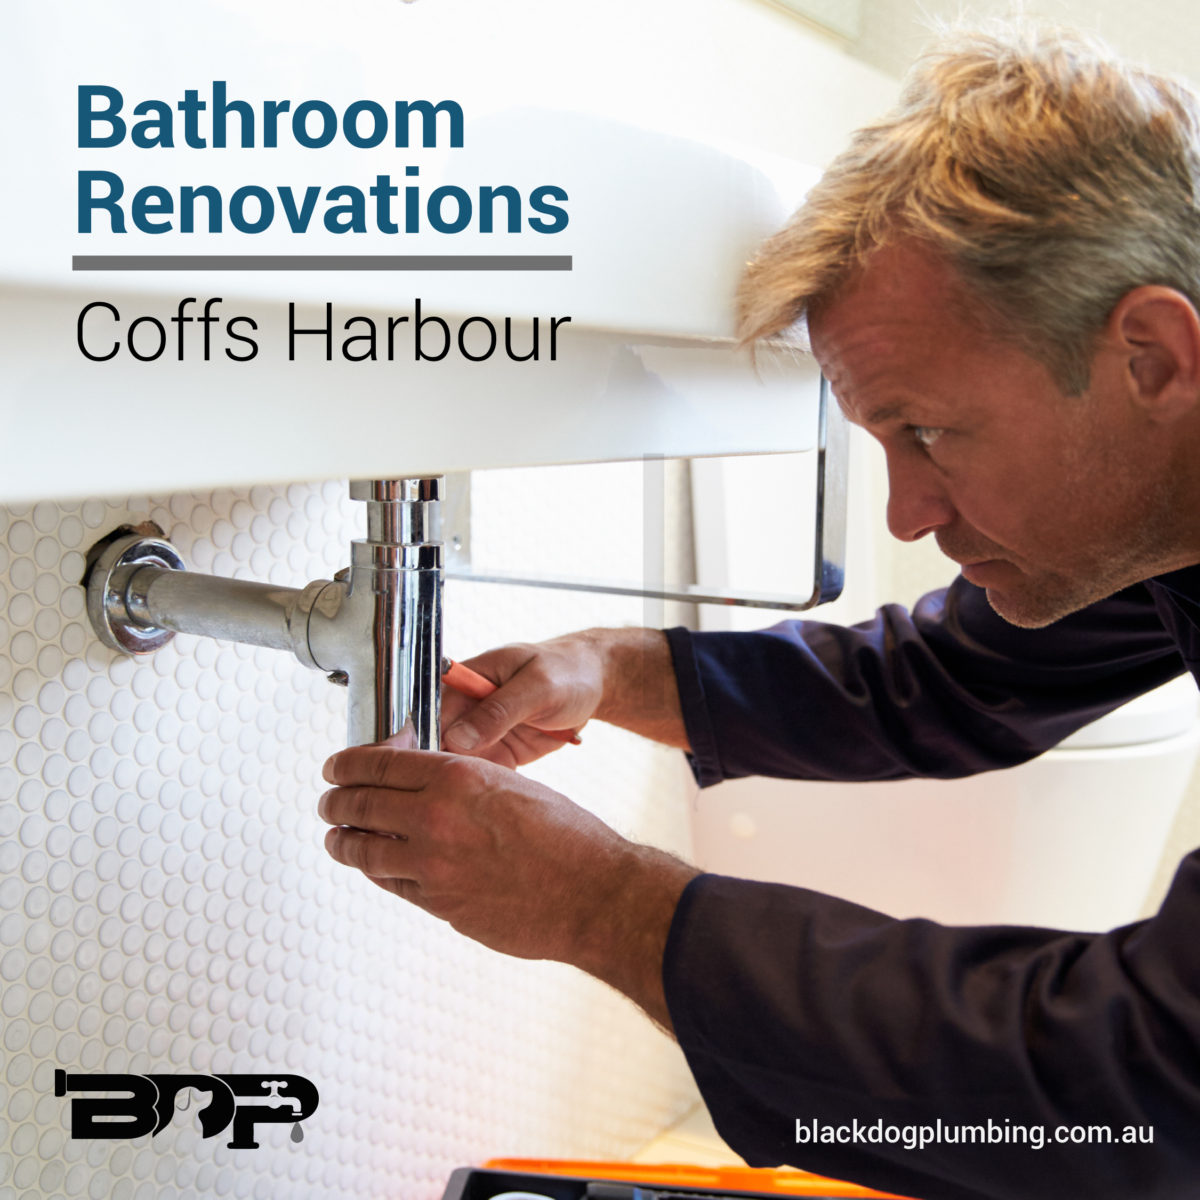 Coffs Harbour bathroom renovations